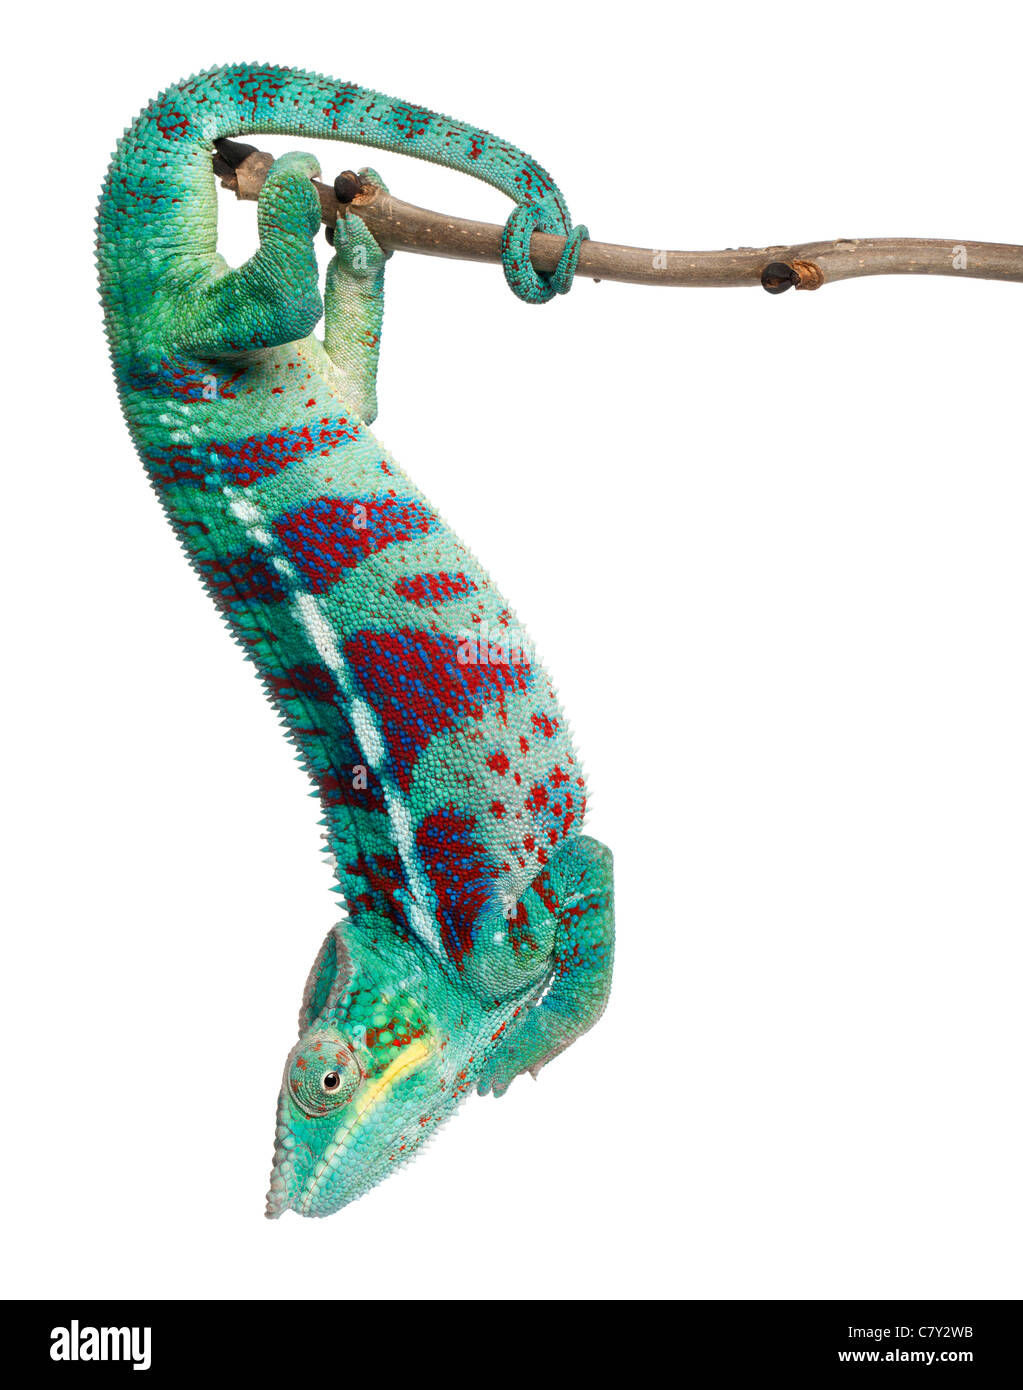 Panther Chameleon Nosy Be, Furcifer pardalis, appeso dal ramo di fronte a uno sfondo bianco Foto Stock